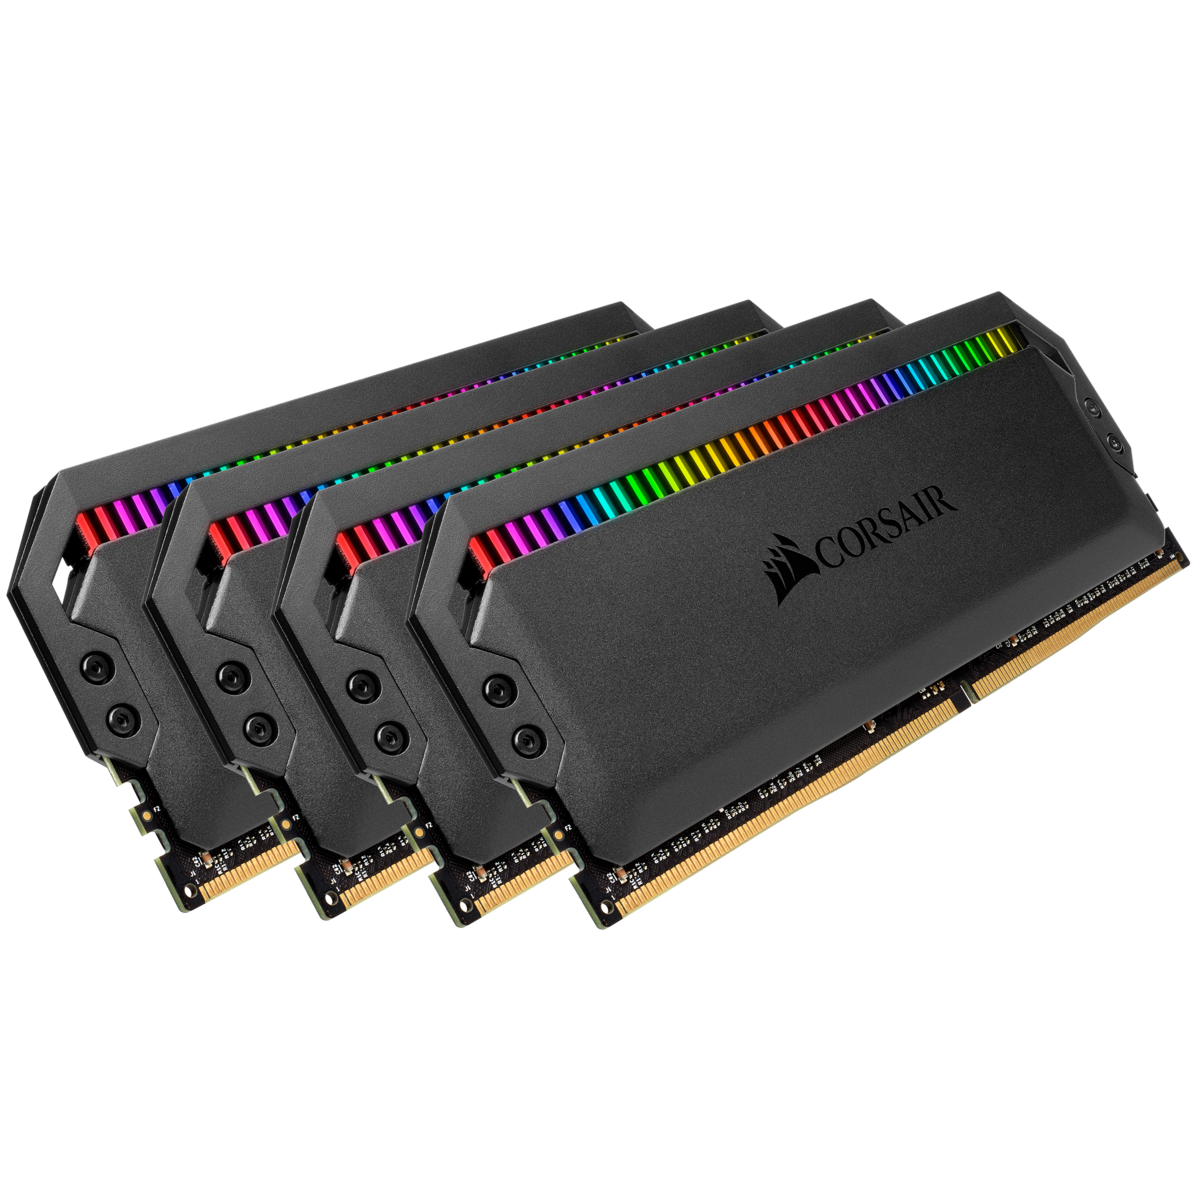 Hsp Black, DDR4 RGB 4x16GB,1.35V, CORSAIR Platinum GB Speicher-Kit Dominator 64